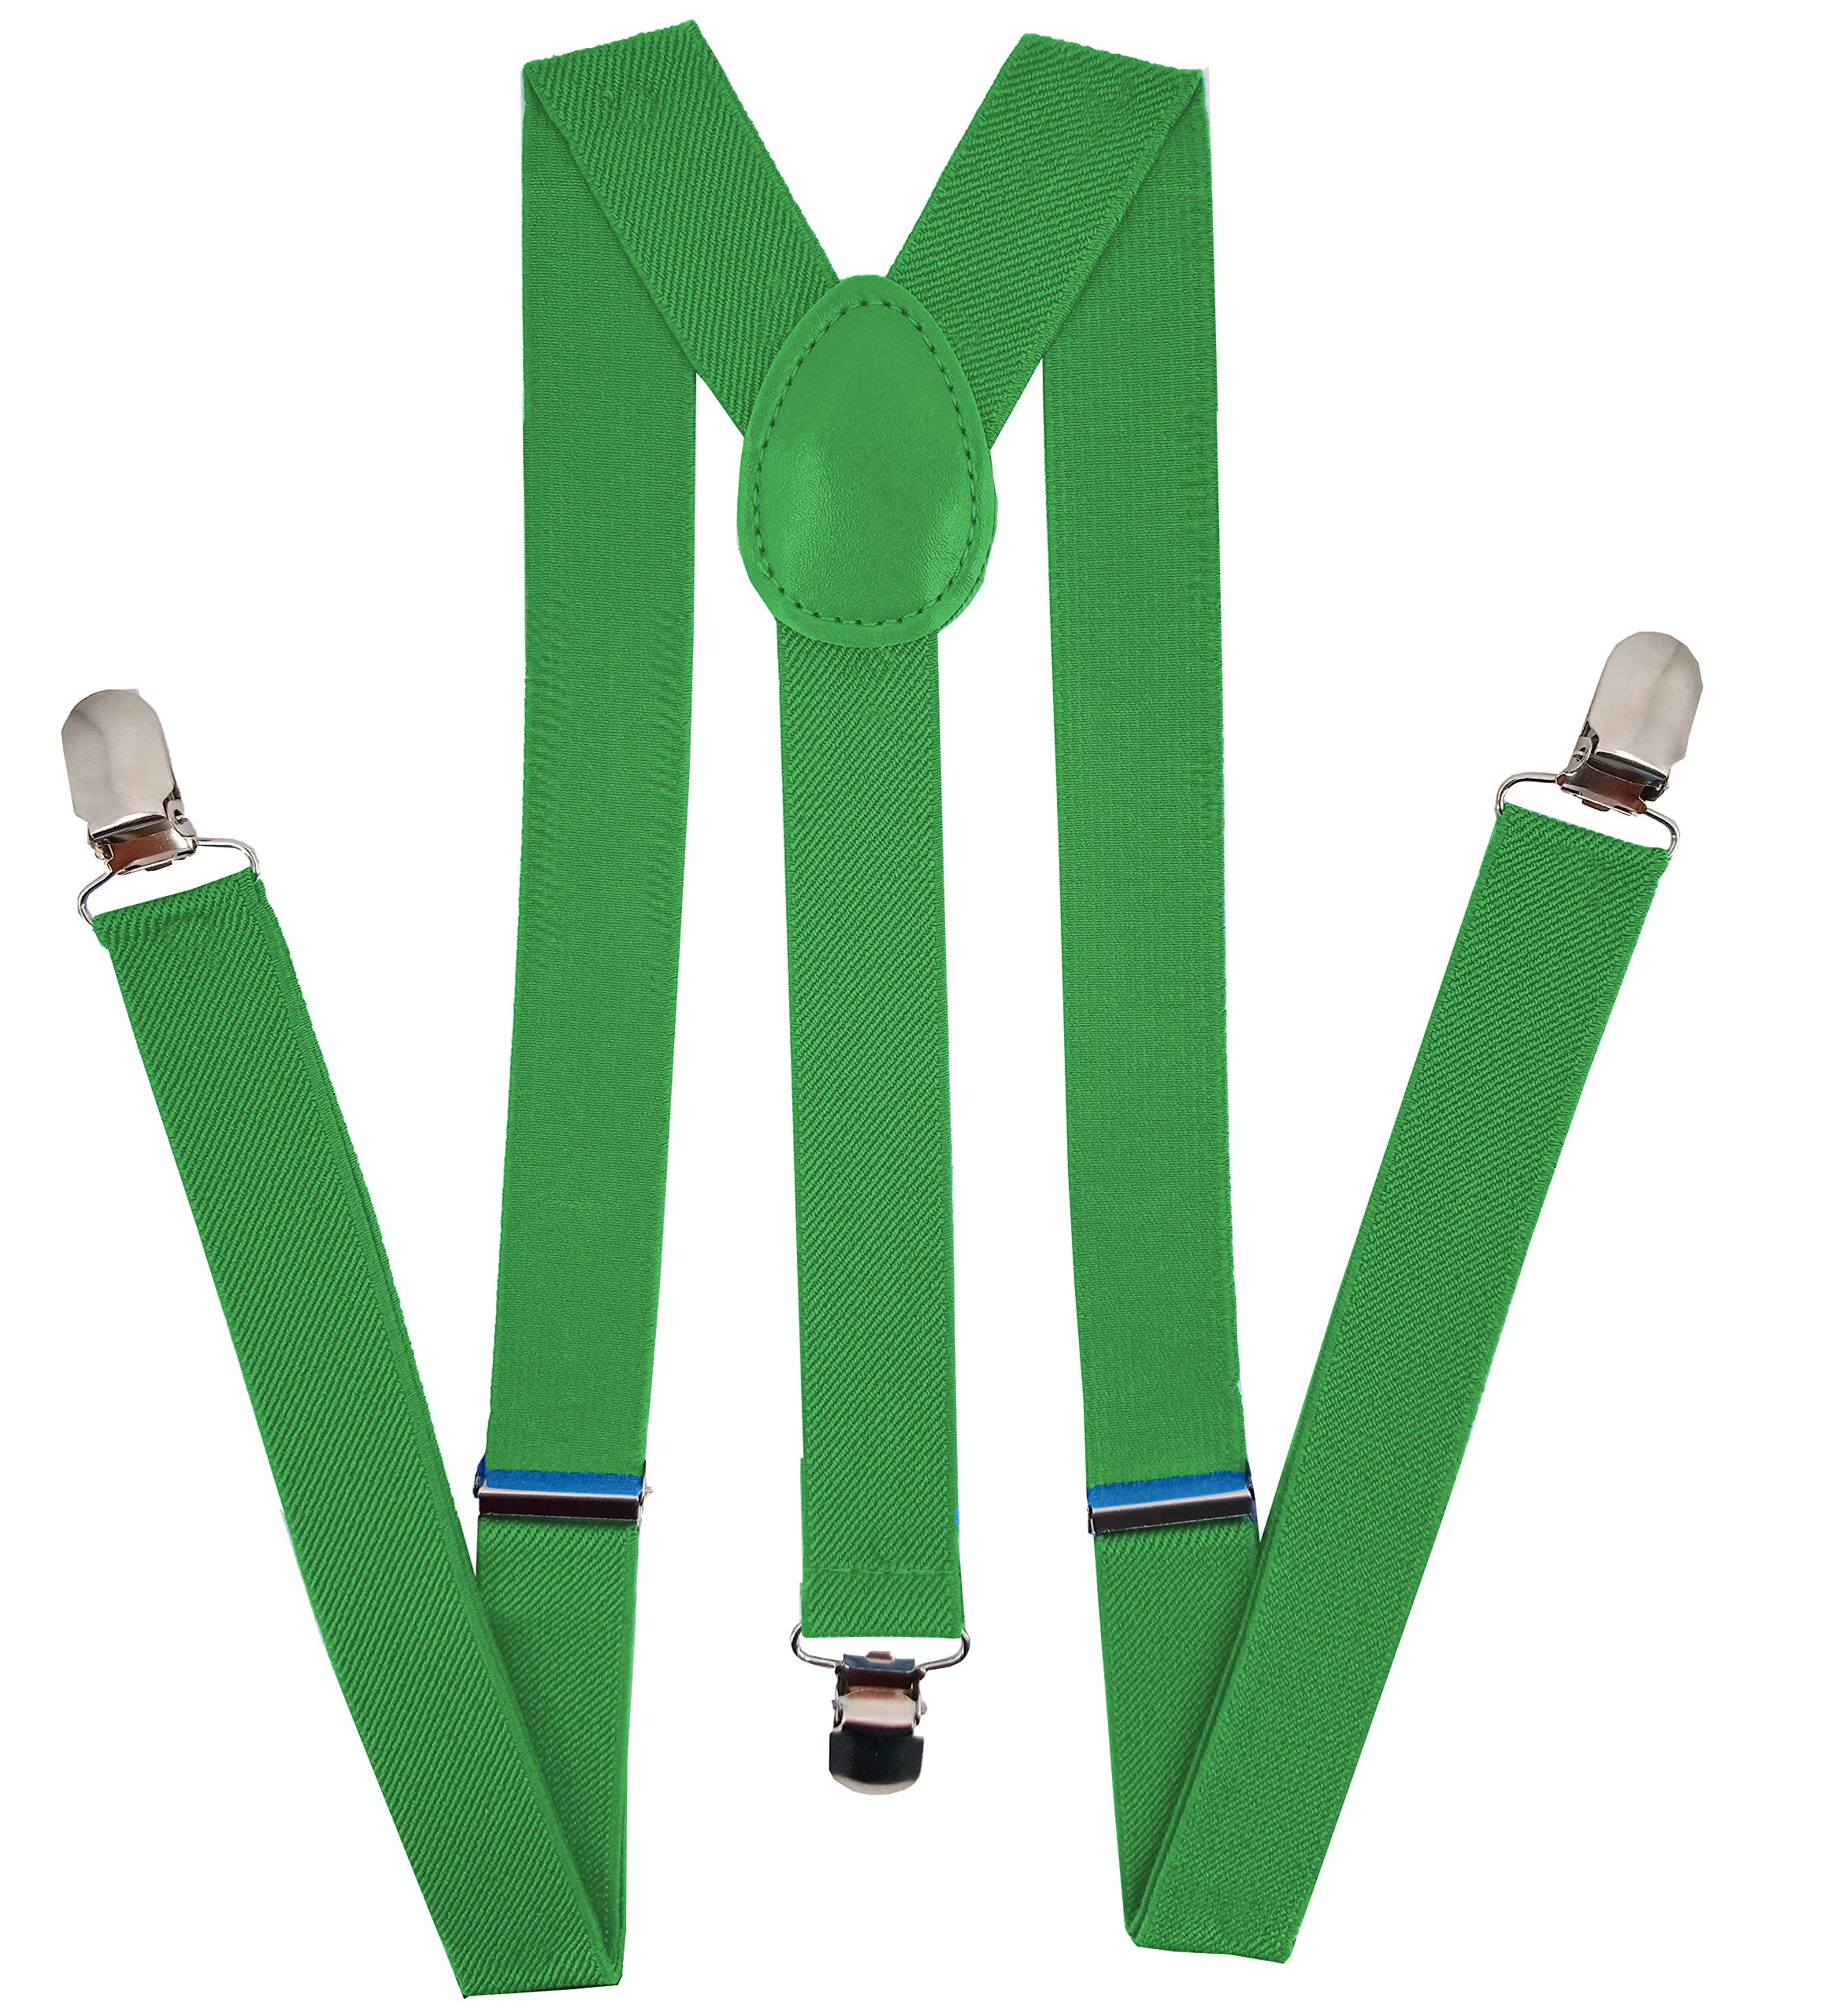 Navisima Suspenders for Kids - Adjustable Suspenders for girls, Toddler, Baby - Elastic Y-Back Design with Strong Metal clips 12